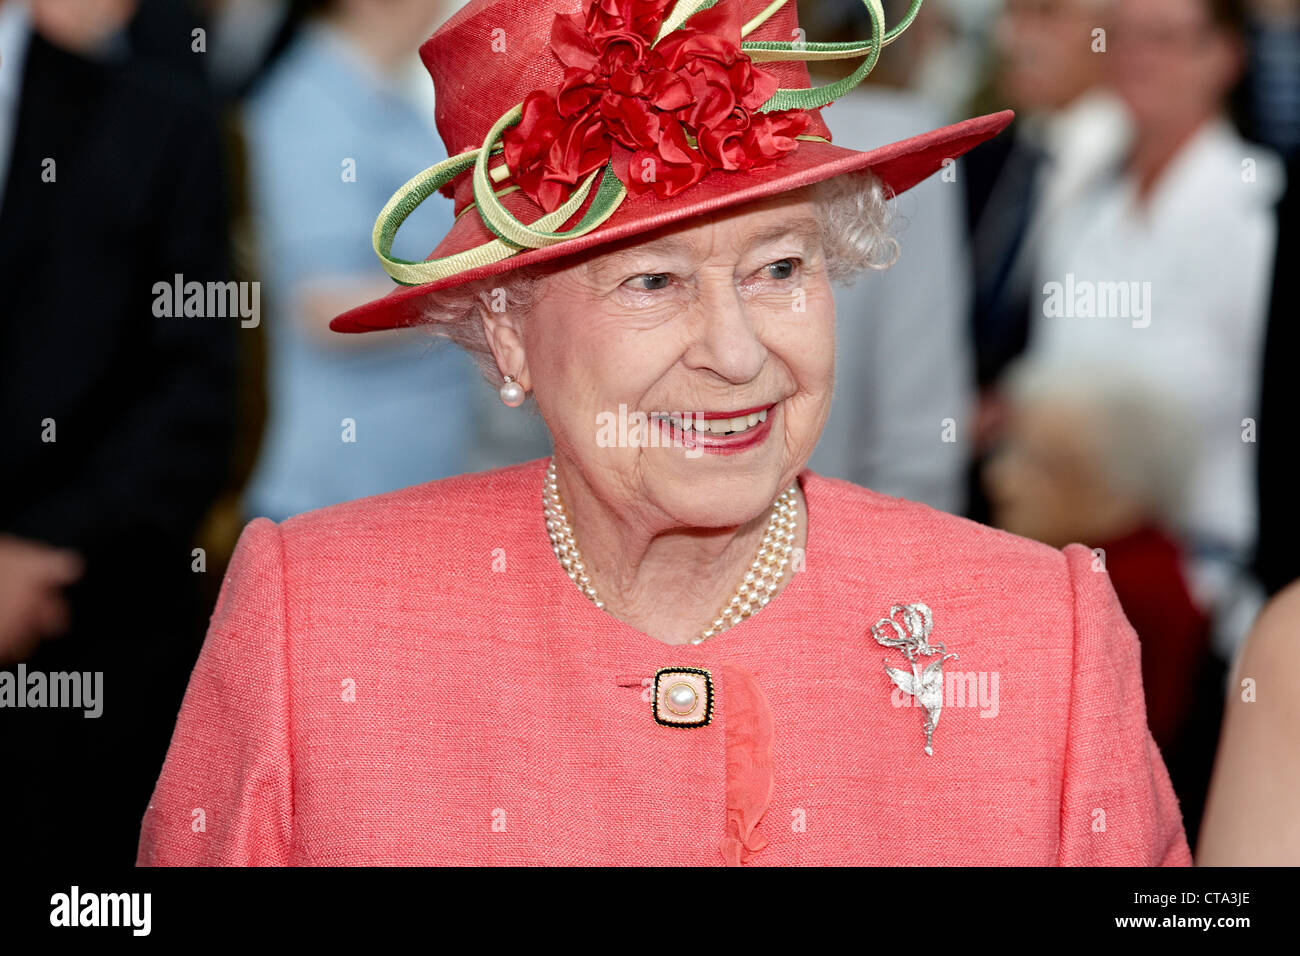 Her Majesty Queen Elizabeth II pictured during her Diamond Jubilee tour in Birmingham, England July 2012. Stock Photo